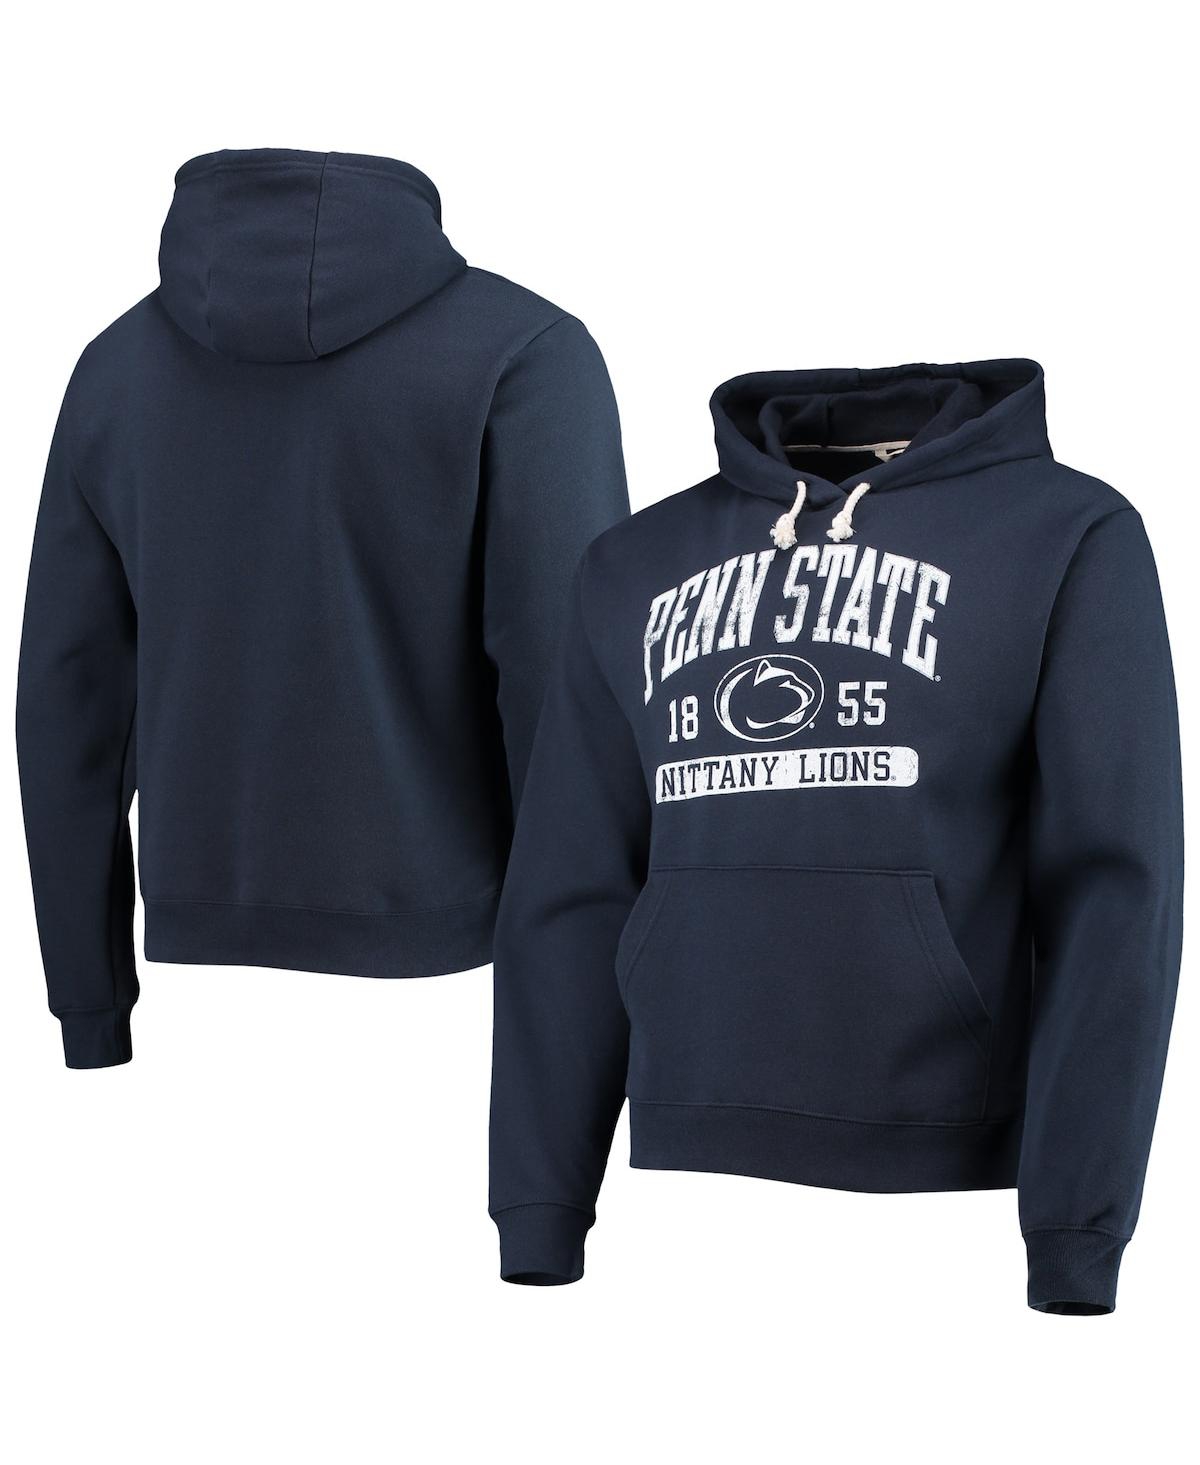 Men's League Collegiate Wear Navy Penn State Nittany Lions Volume Up Essential Fleece Pullover Hoodie - Navy